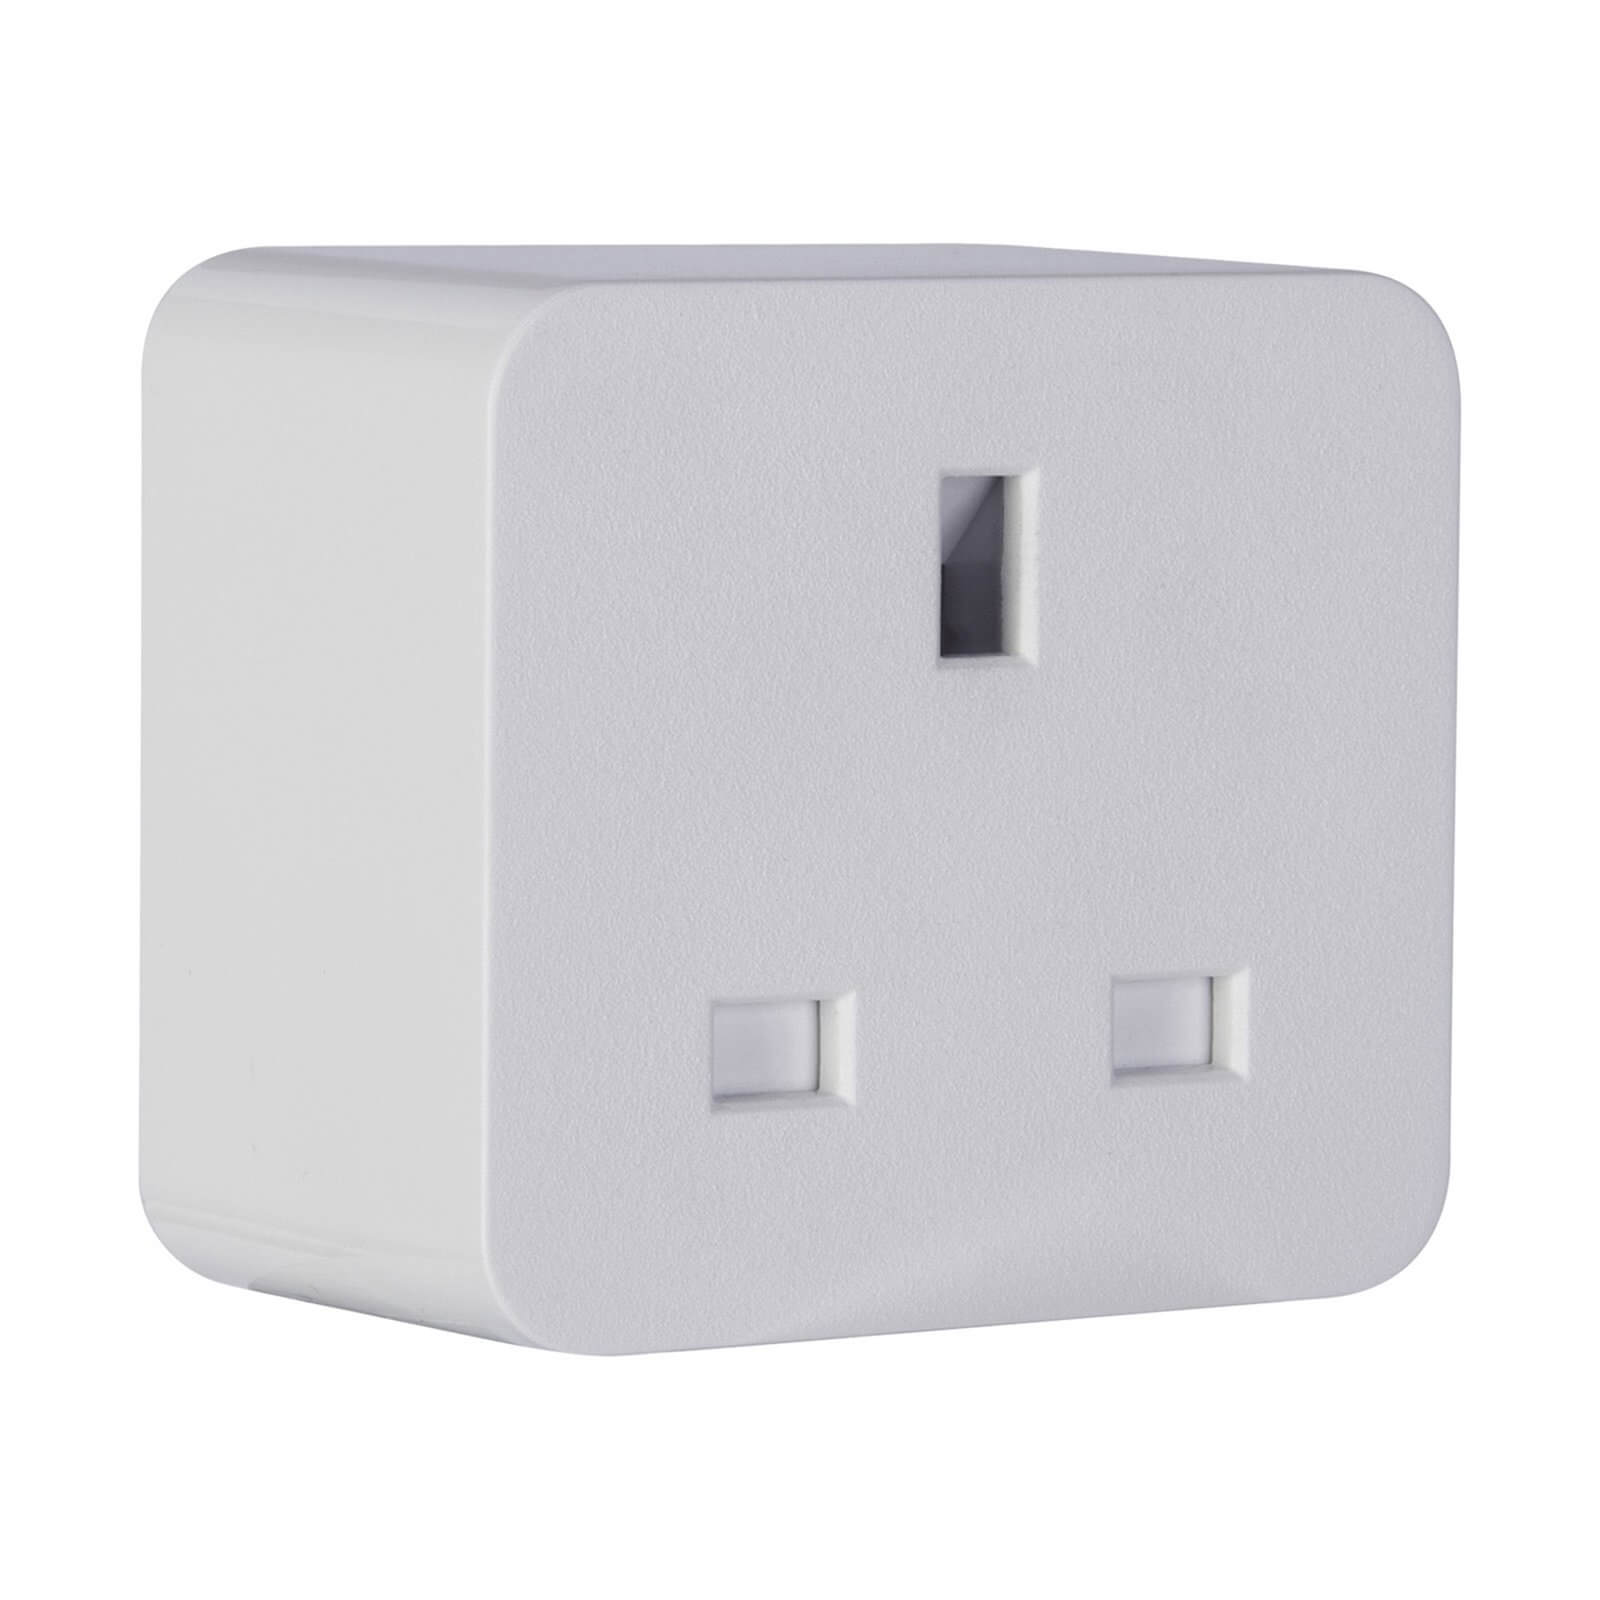 Photo of Tcp Smart Wifi Uk Single Socket Plug - White